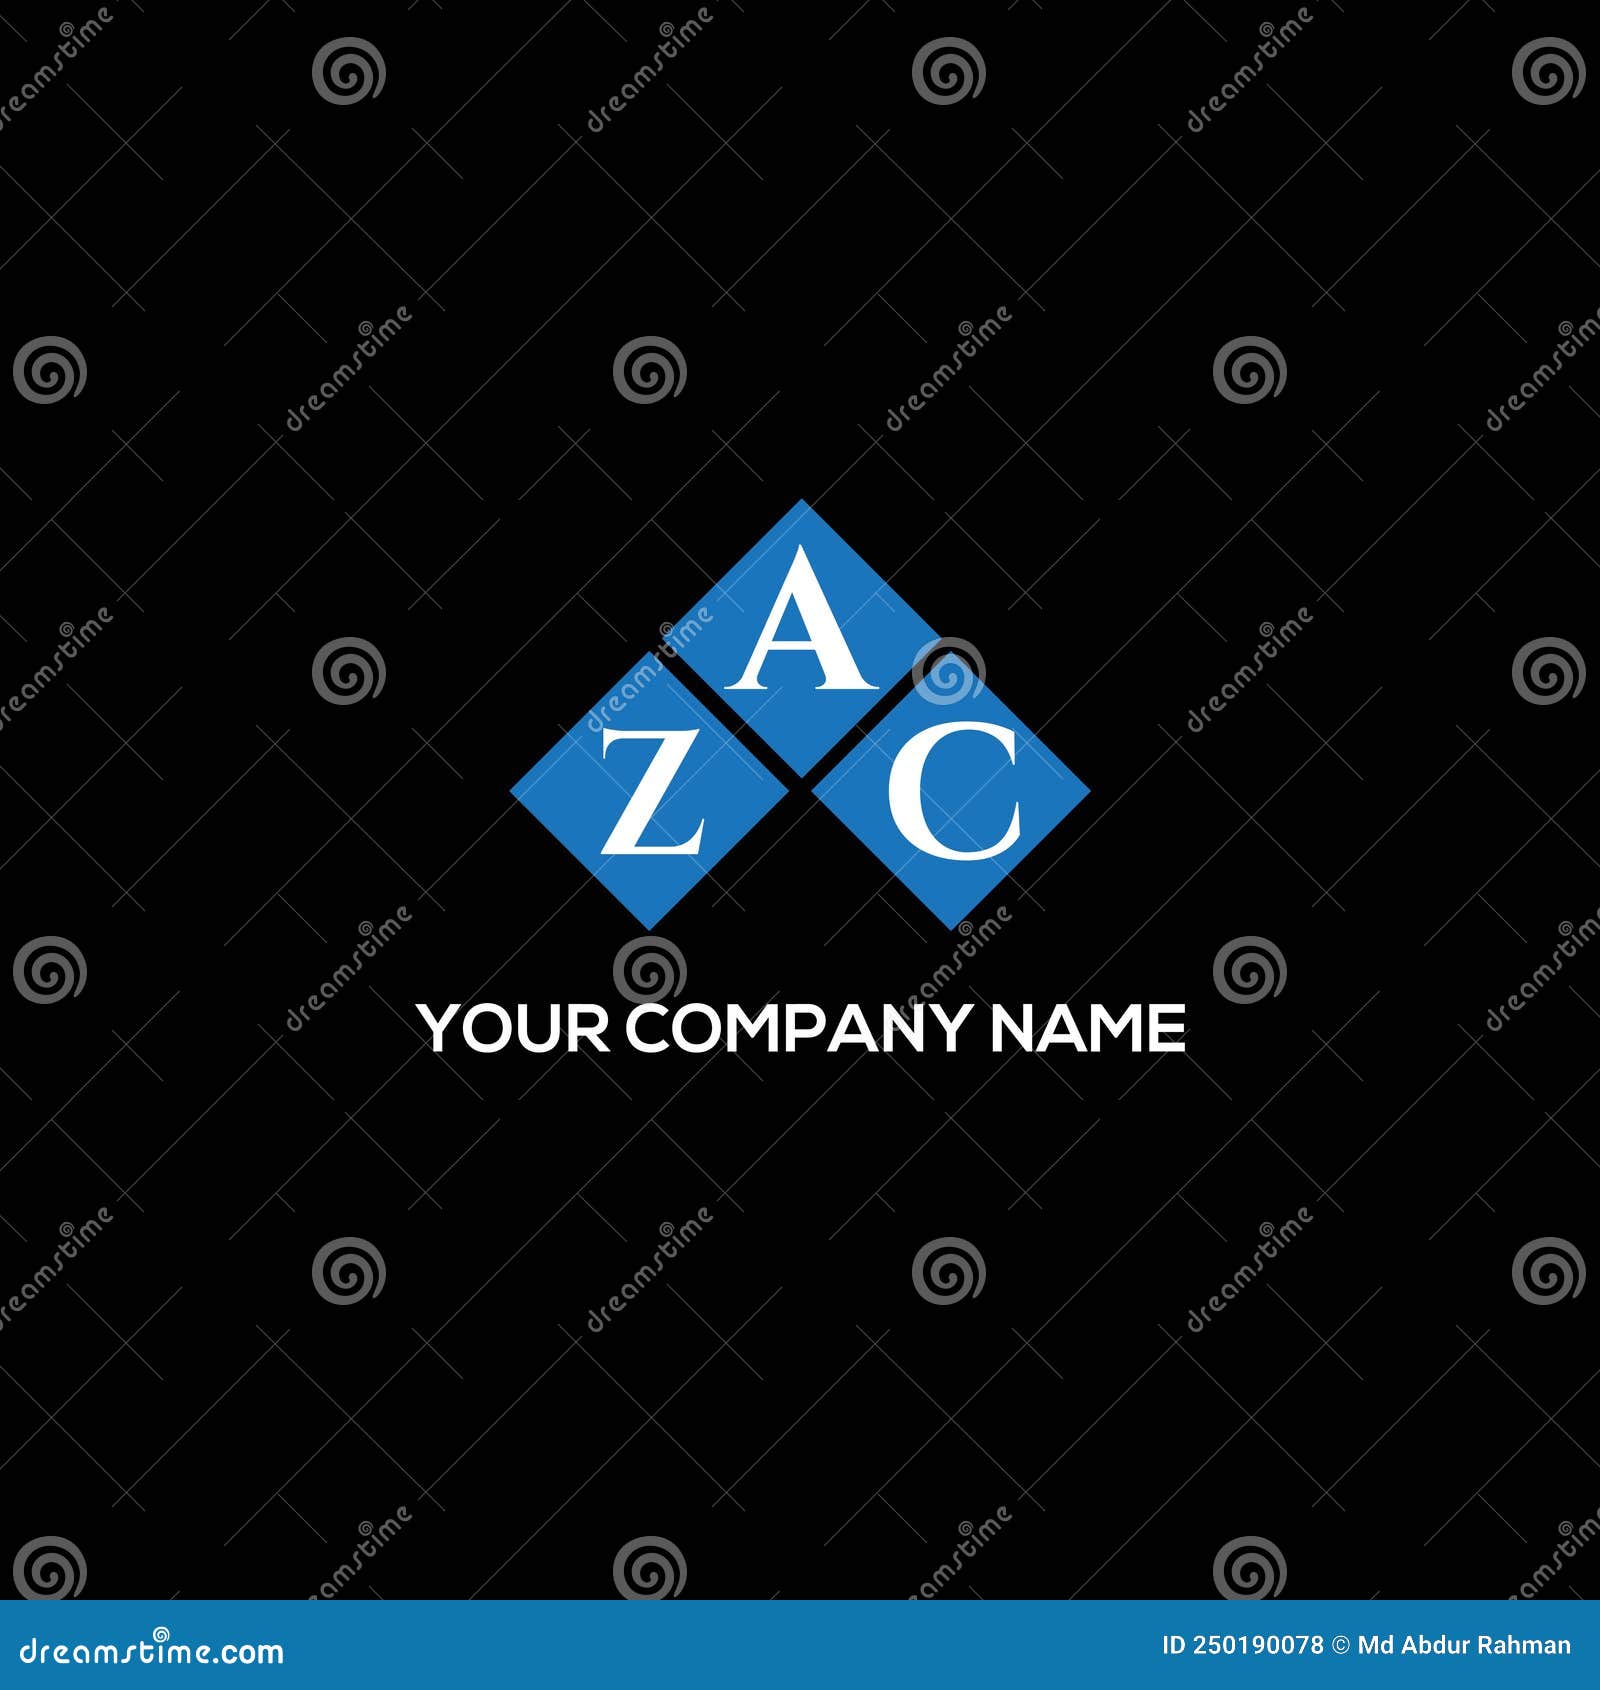 zac letter logo  on black background. zac creative initials letter logo concept. zac letter 